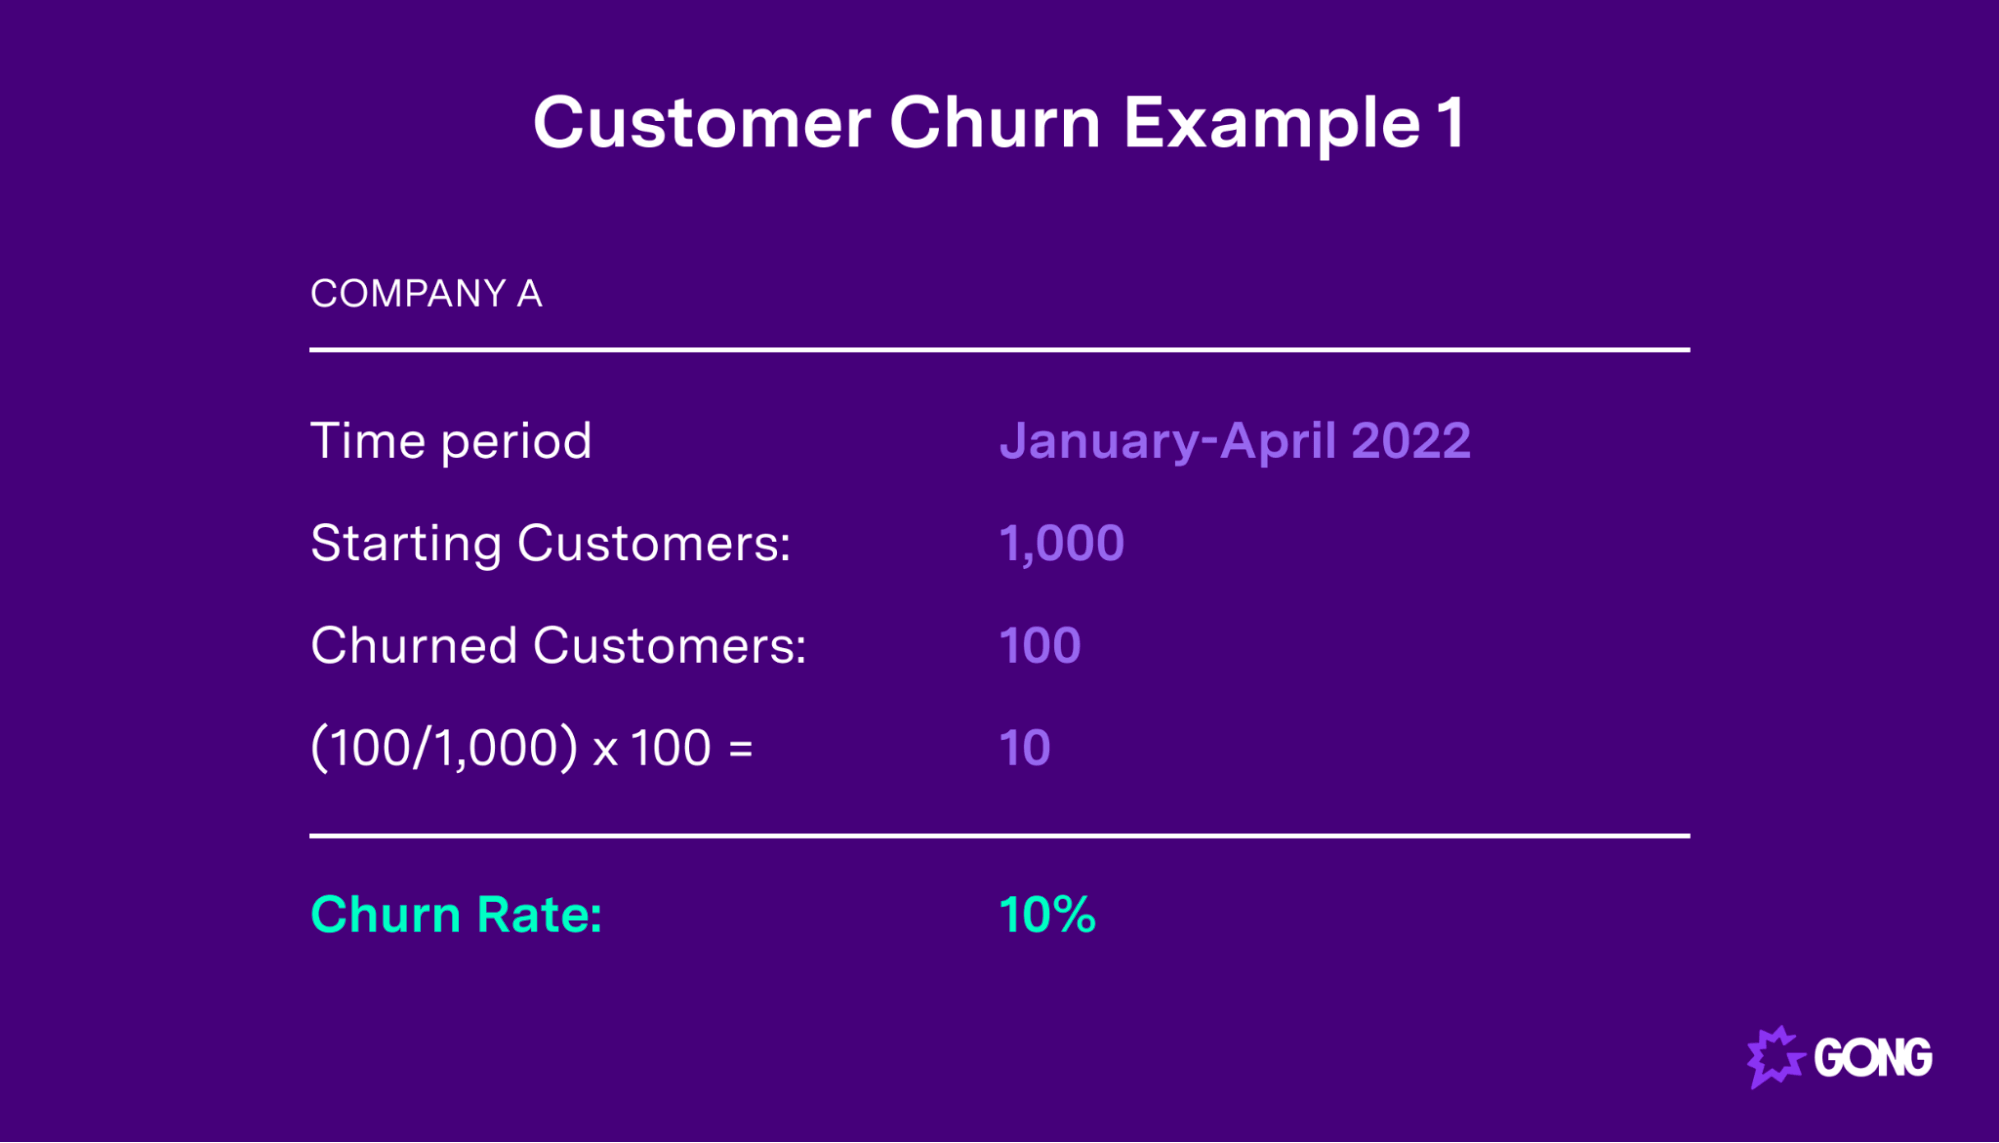 Customer churn example calculation